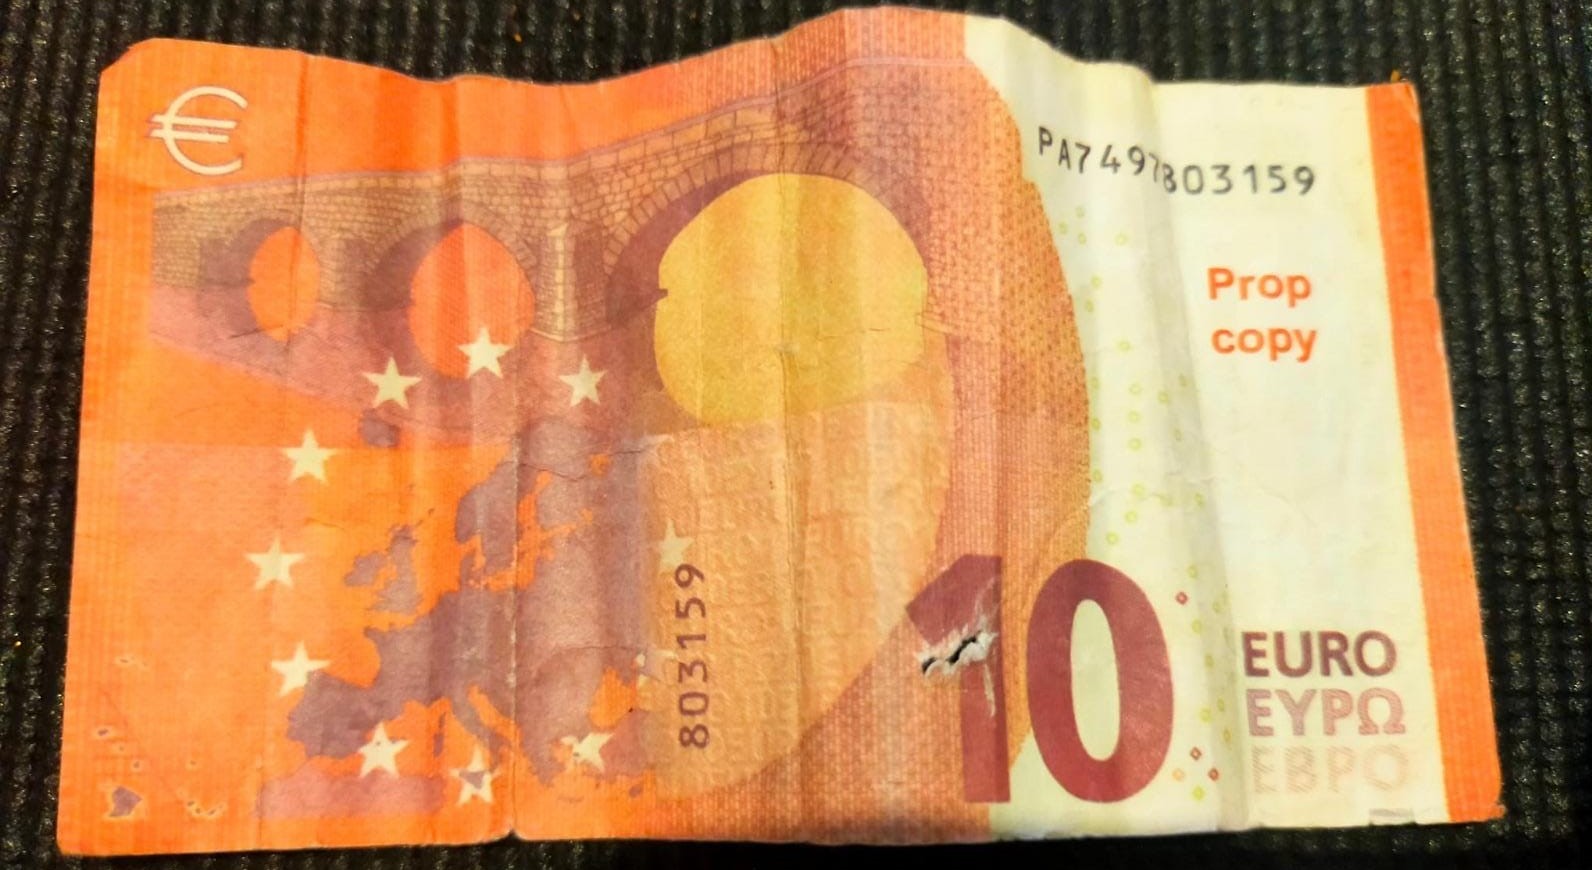 Cómo detectar billetes falsos de 10 euros 